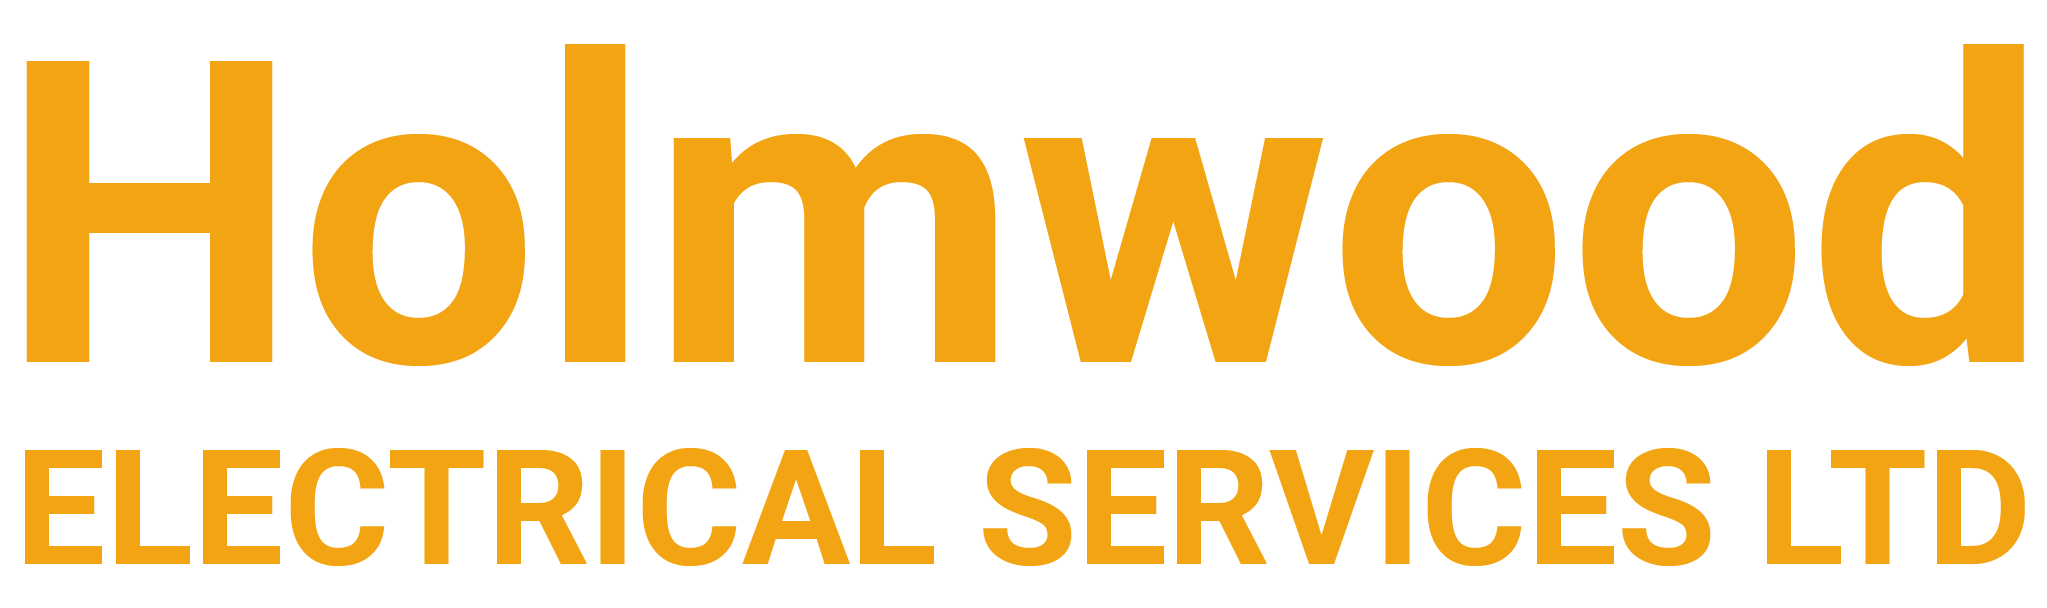 Holmwood Electrical Services Ltd